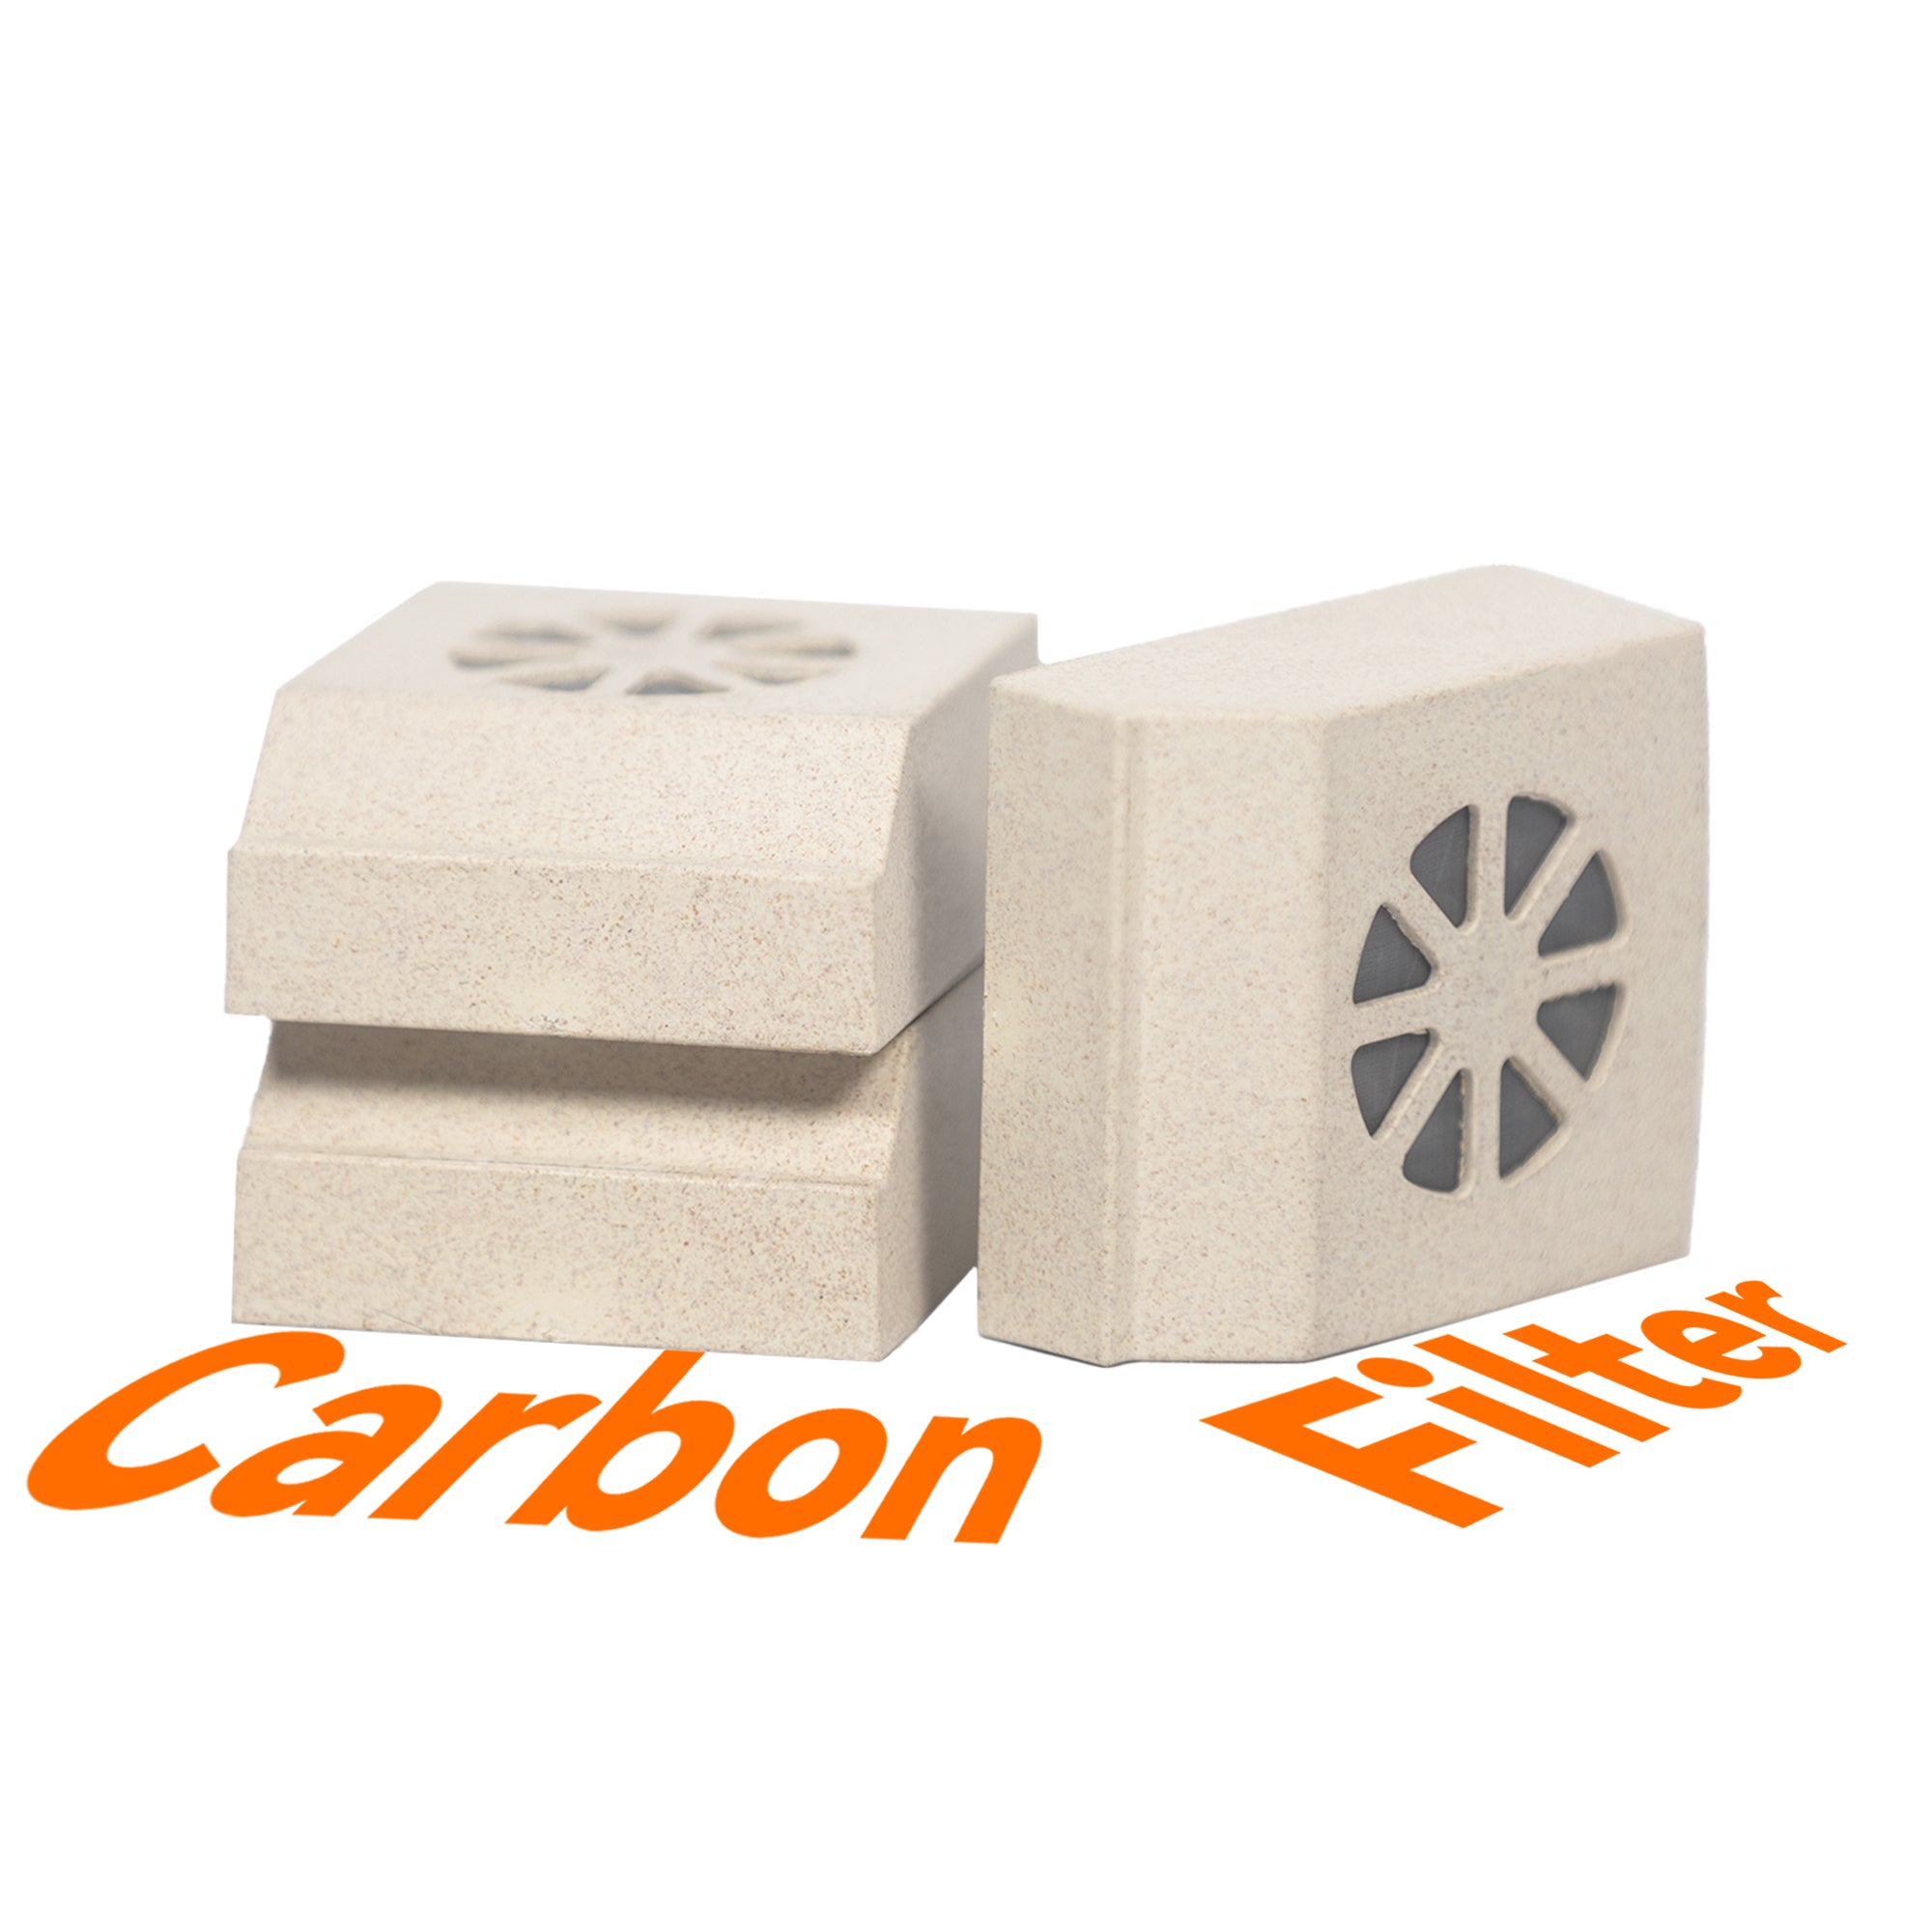 Carbon Filter*3